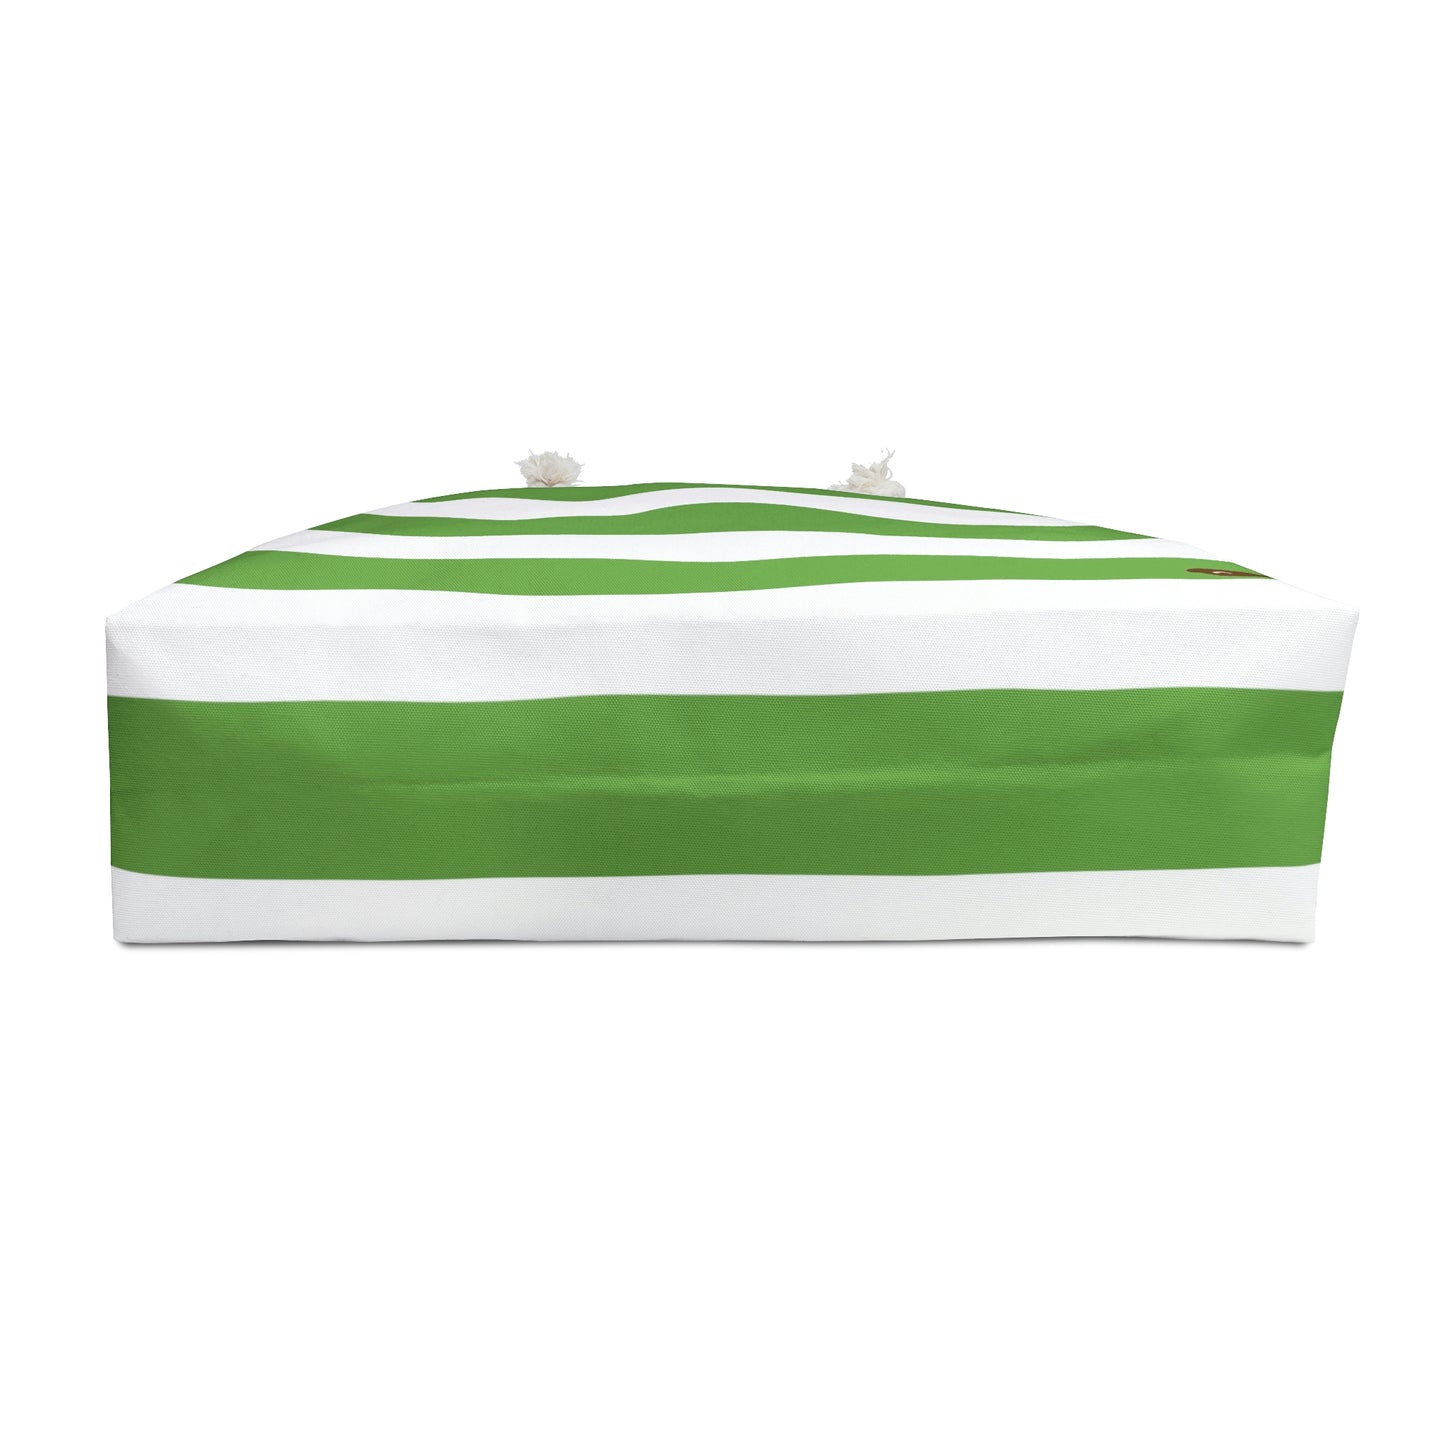 Weekender Tote Bag - Lime Green/White Stripes